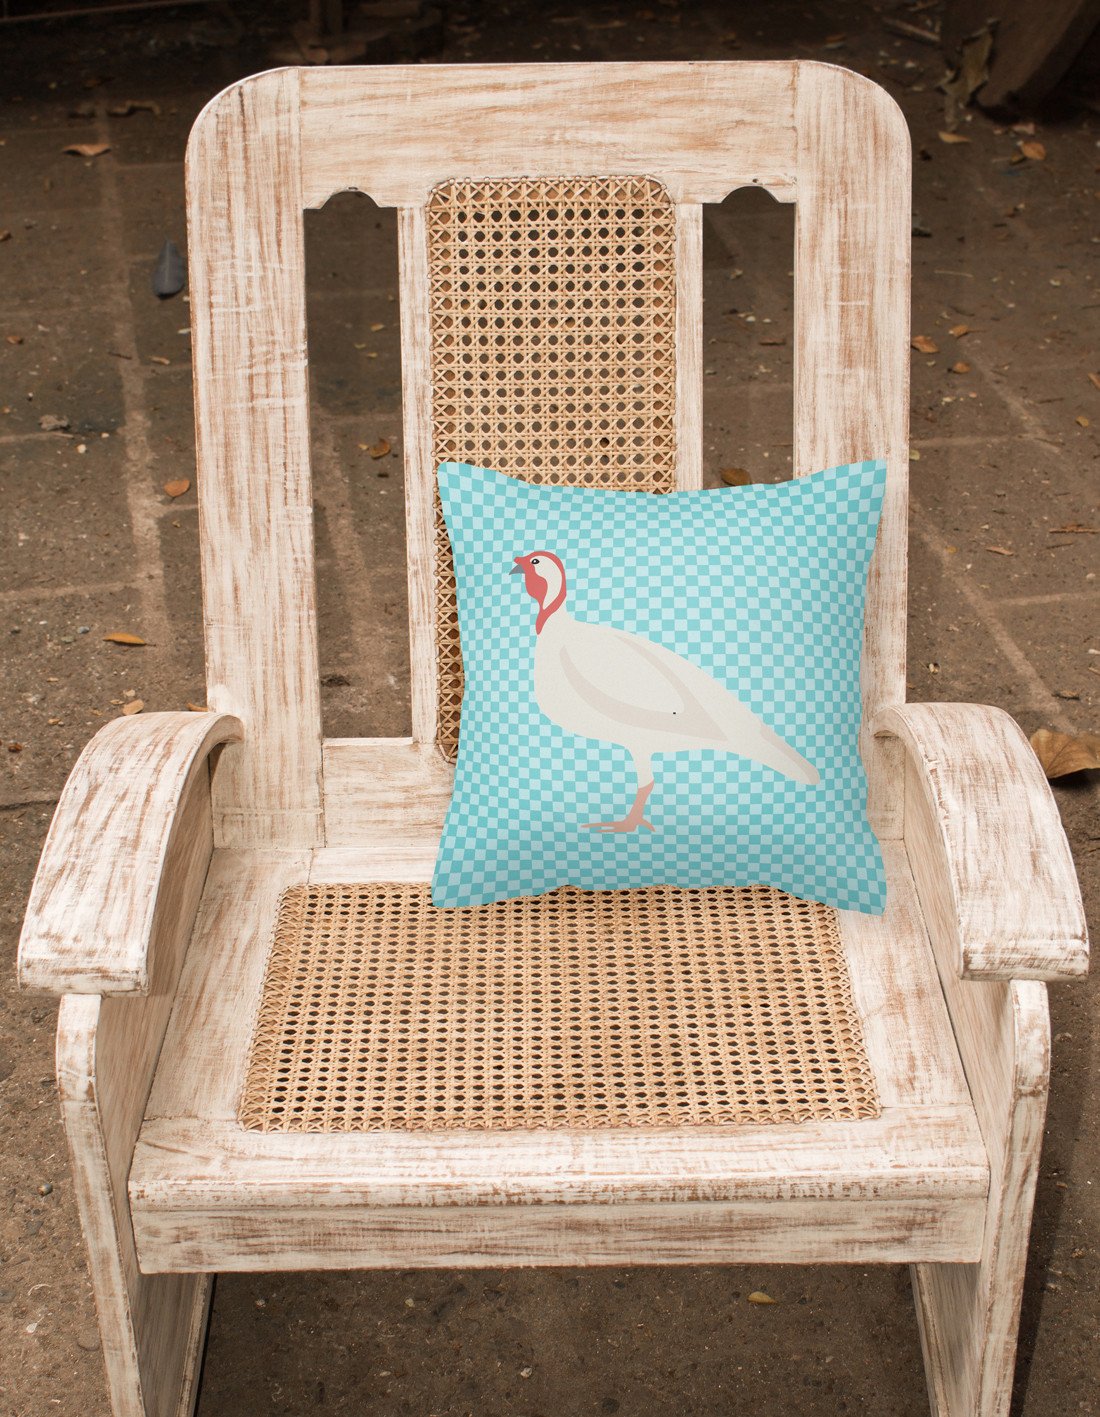 Beltsville Small White Turkey Hen Blue Check Fabric Decorative Pillow BB8163PW1818 by Caroline's Treasures